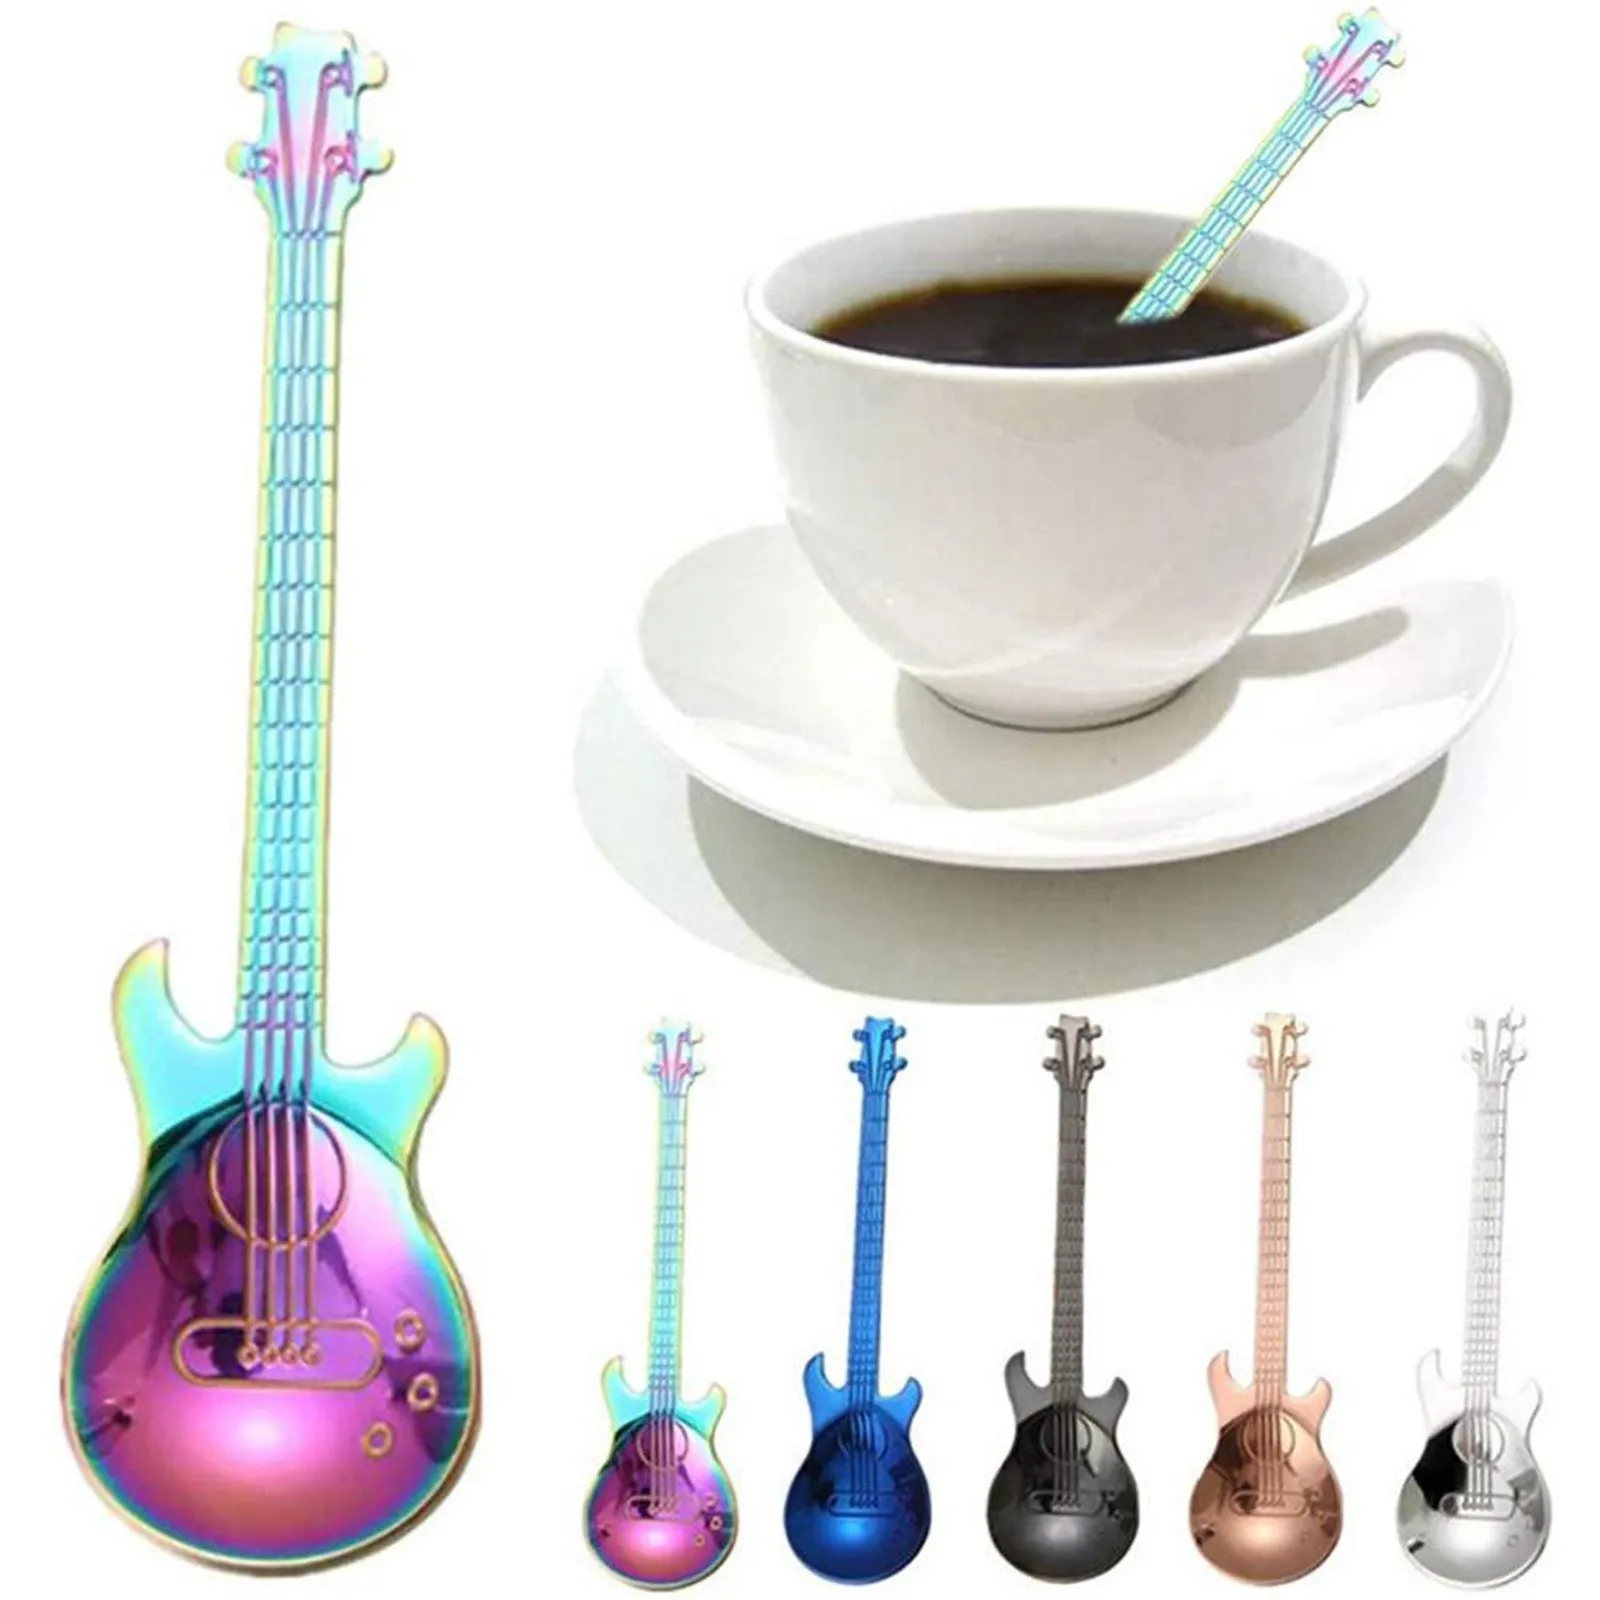 

2021 Multicolor Creative Stainless Steel Guitar Spoons Rainbow Coffee Tea Ice Spoon Flatware Drinking Tools As Gift Souvenir